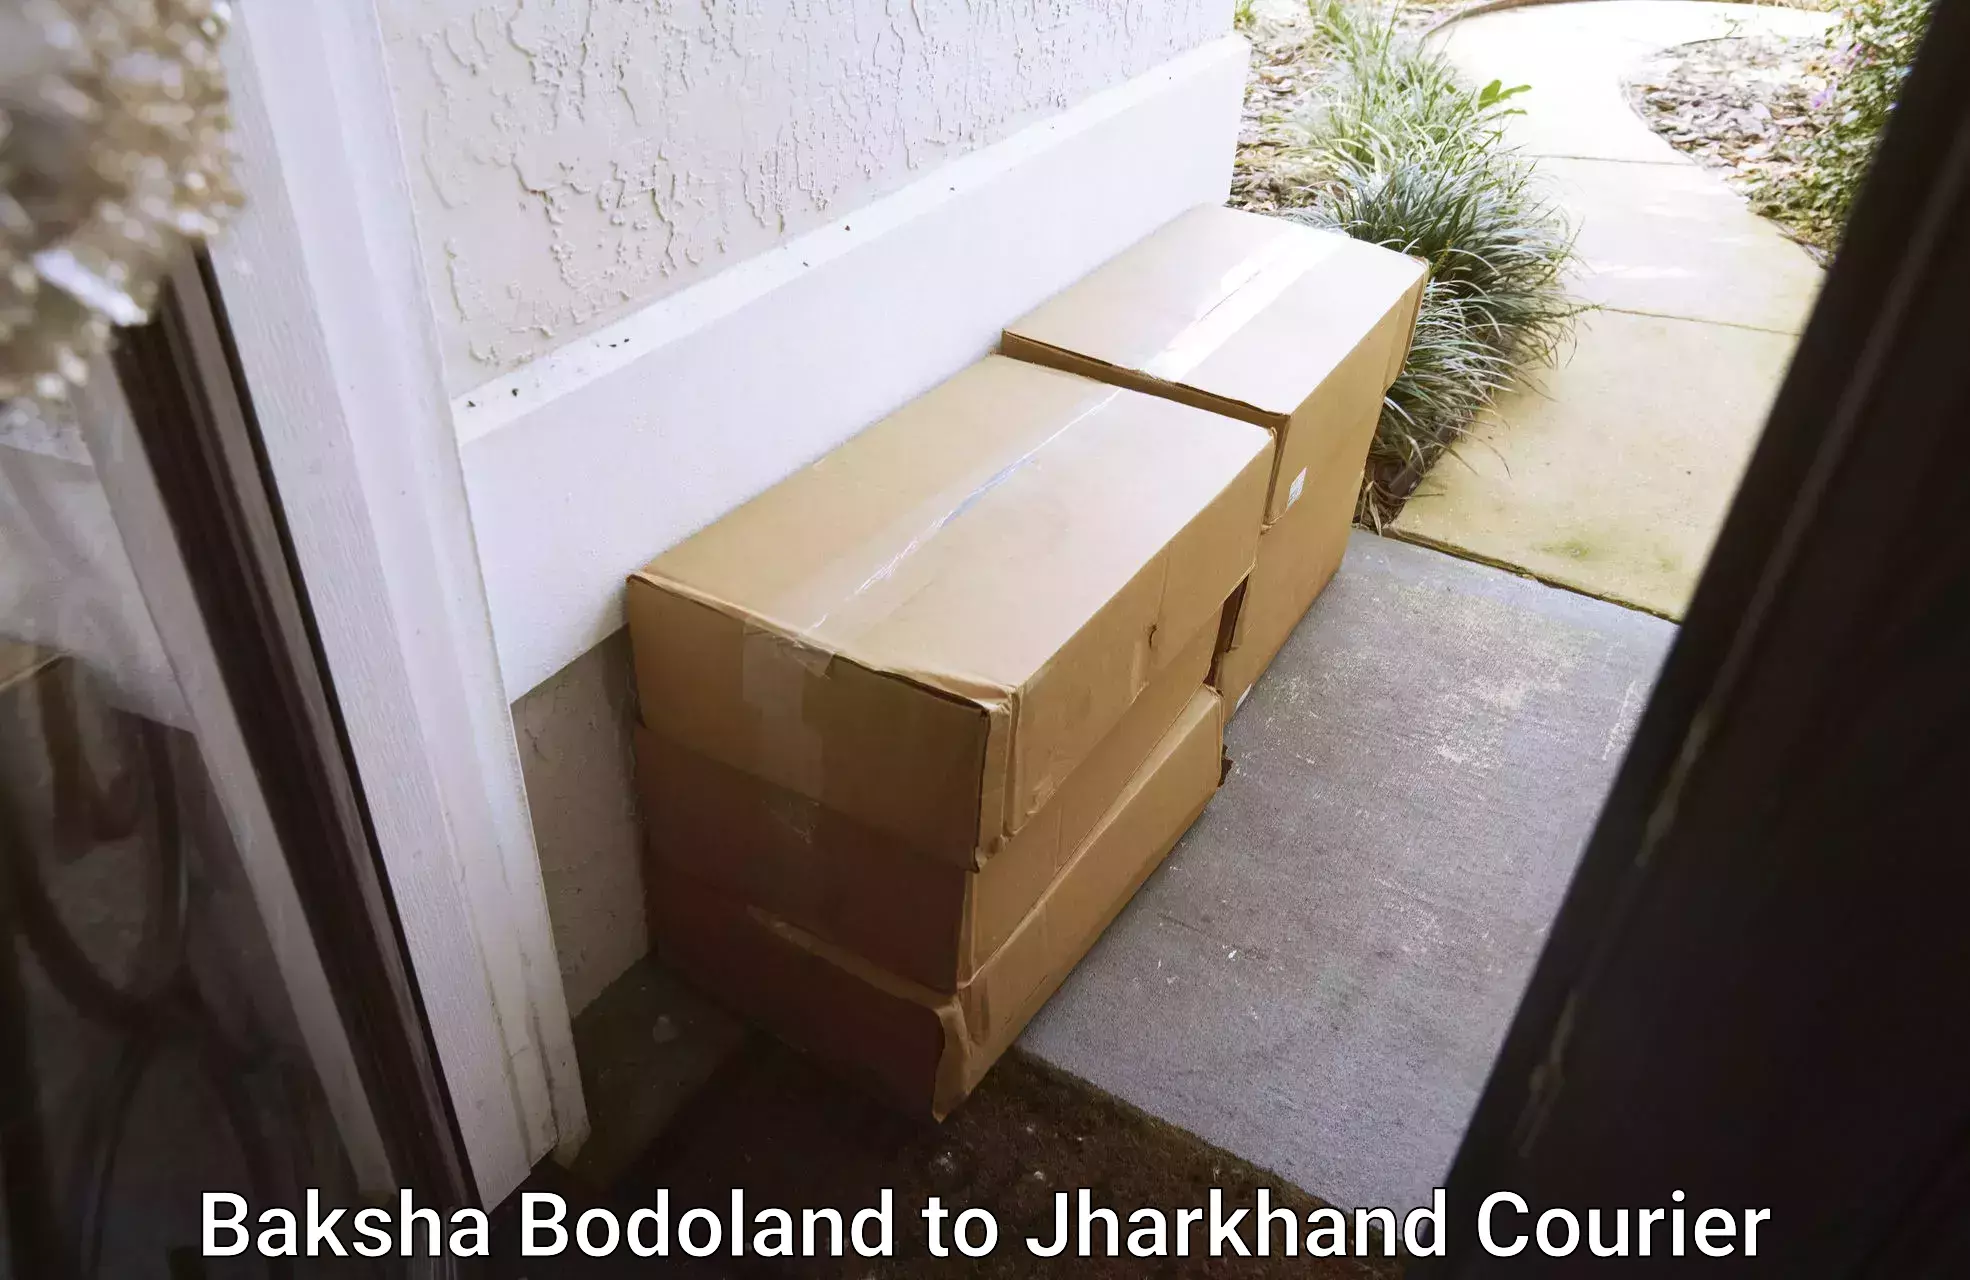 Courier service efficiency Baksha Bodoland to Jharkhand